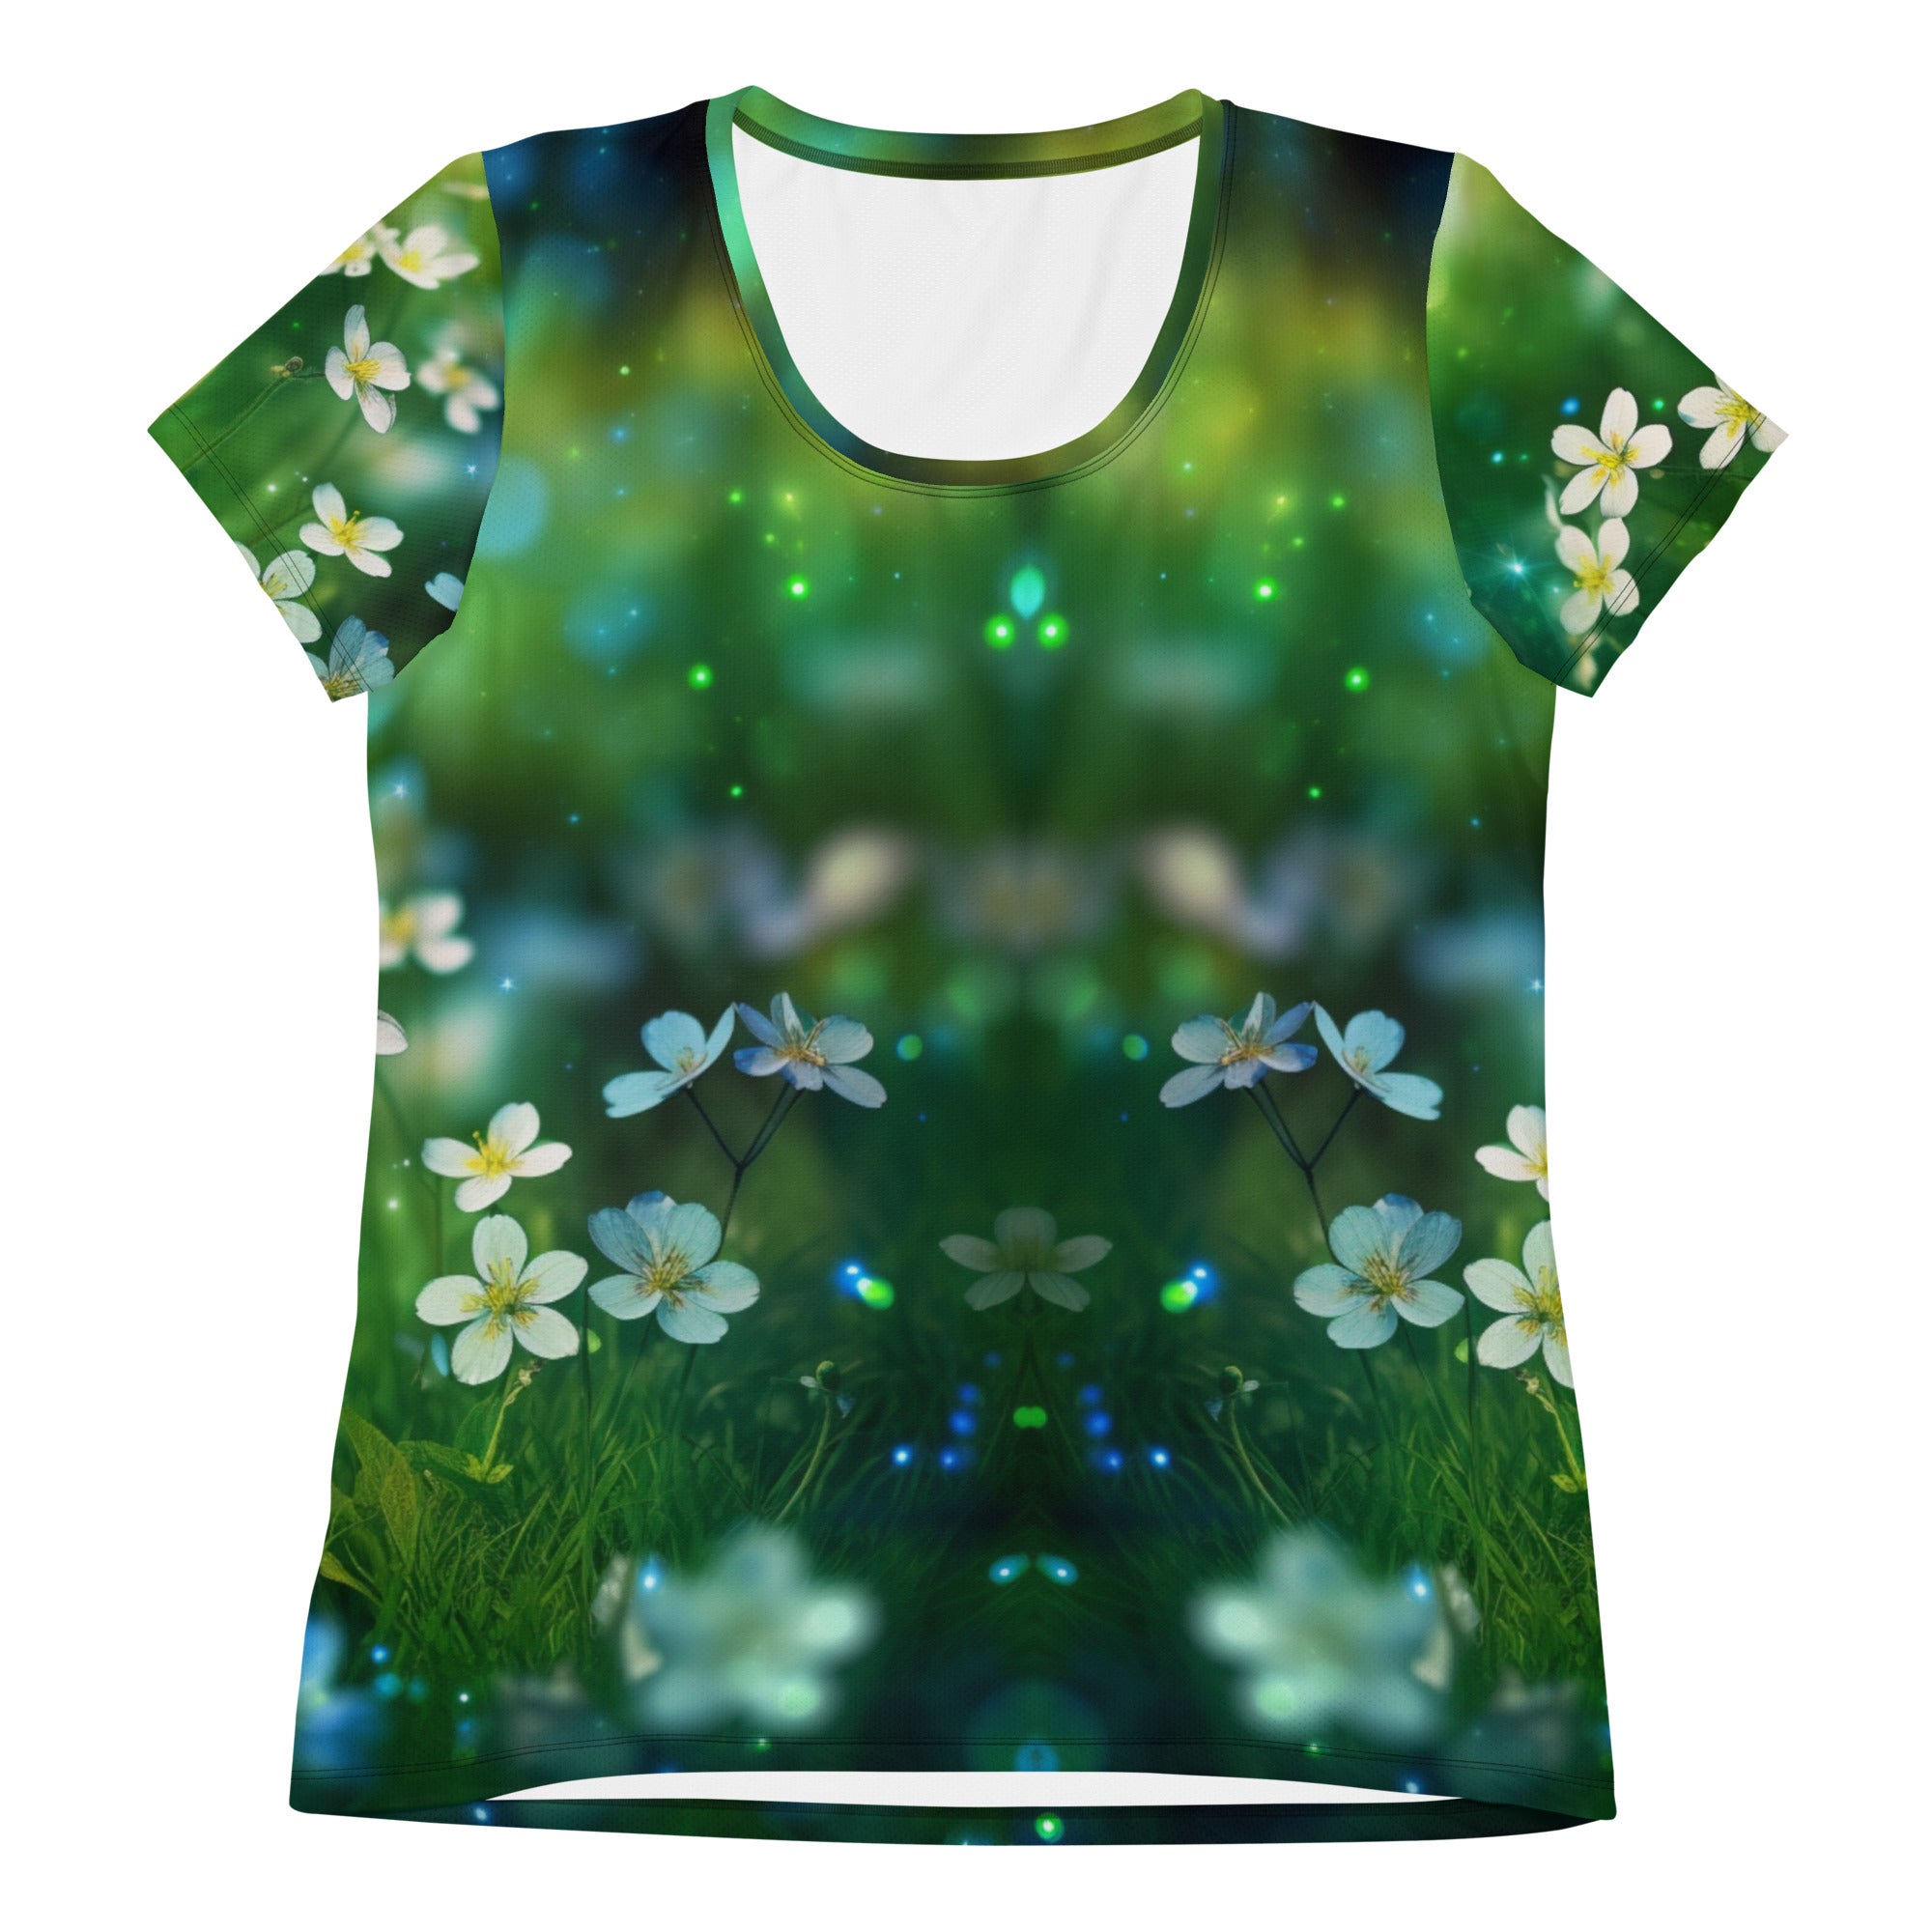 Light Green Sparkling Athletic Tee for Girls and Women | Workout Shirt | Training T-Shirt | Girl Running Tee | Gym Shirt | Exercise Shirt